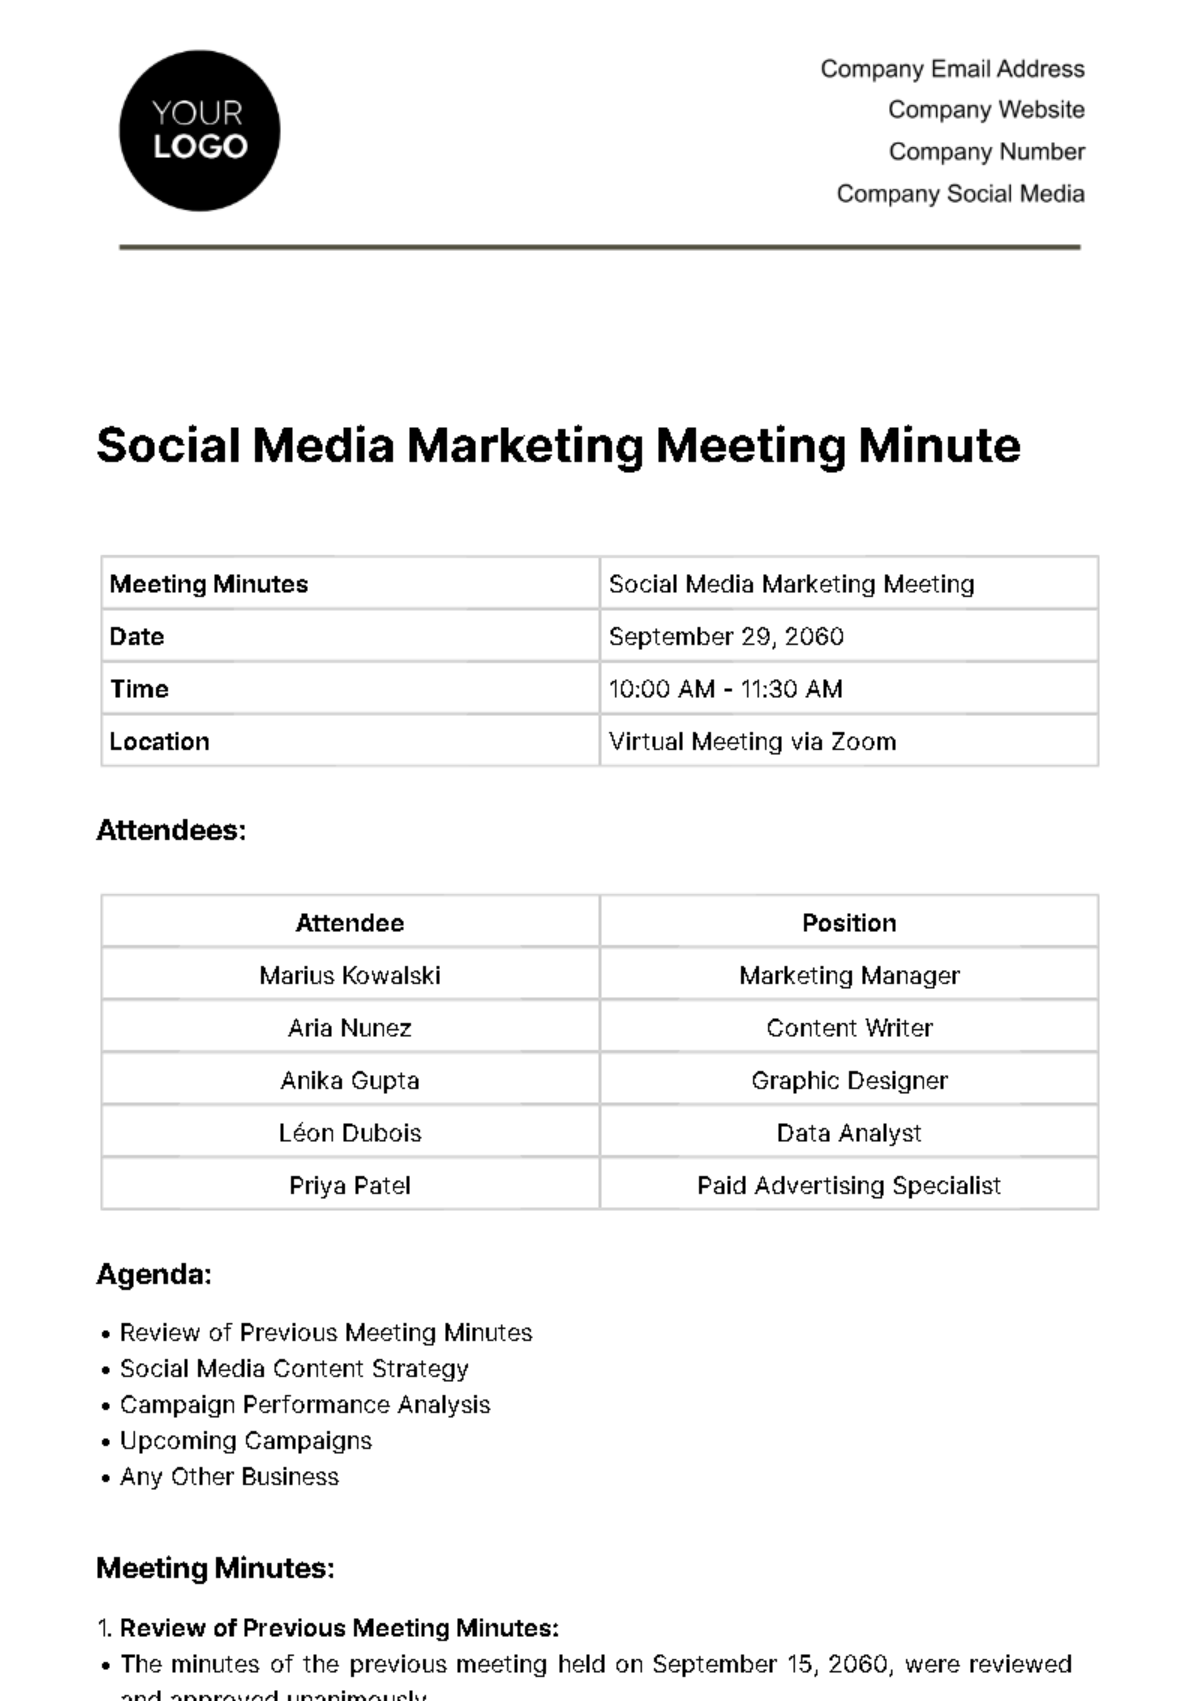 Social Media Marketing Meeting Minute Template